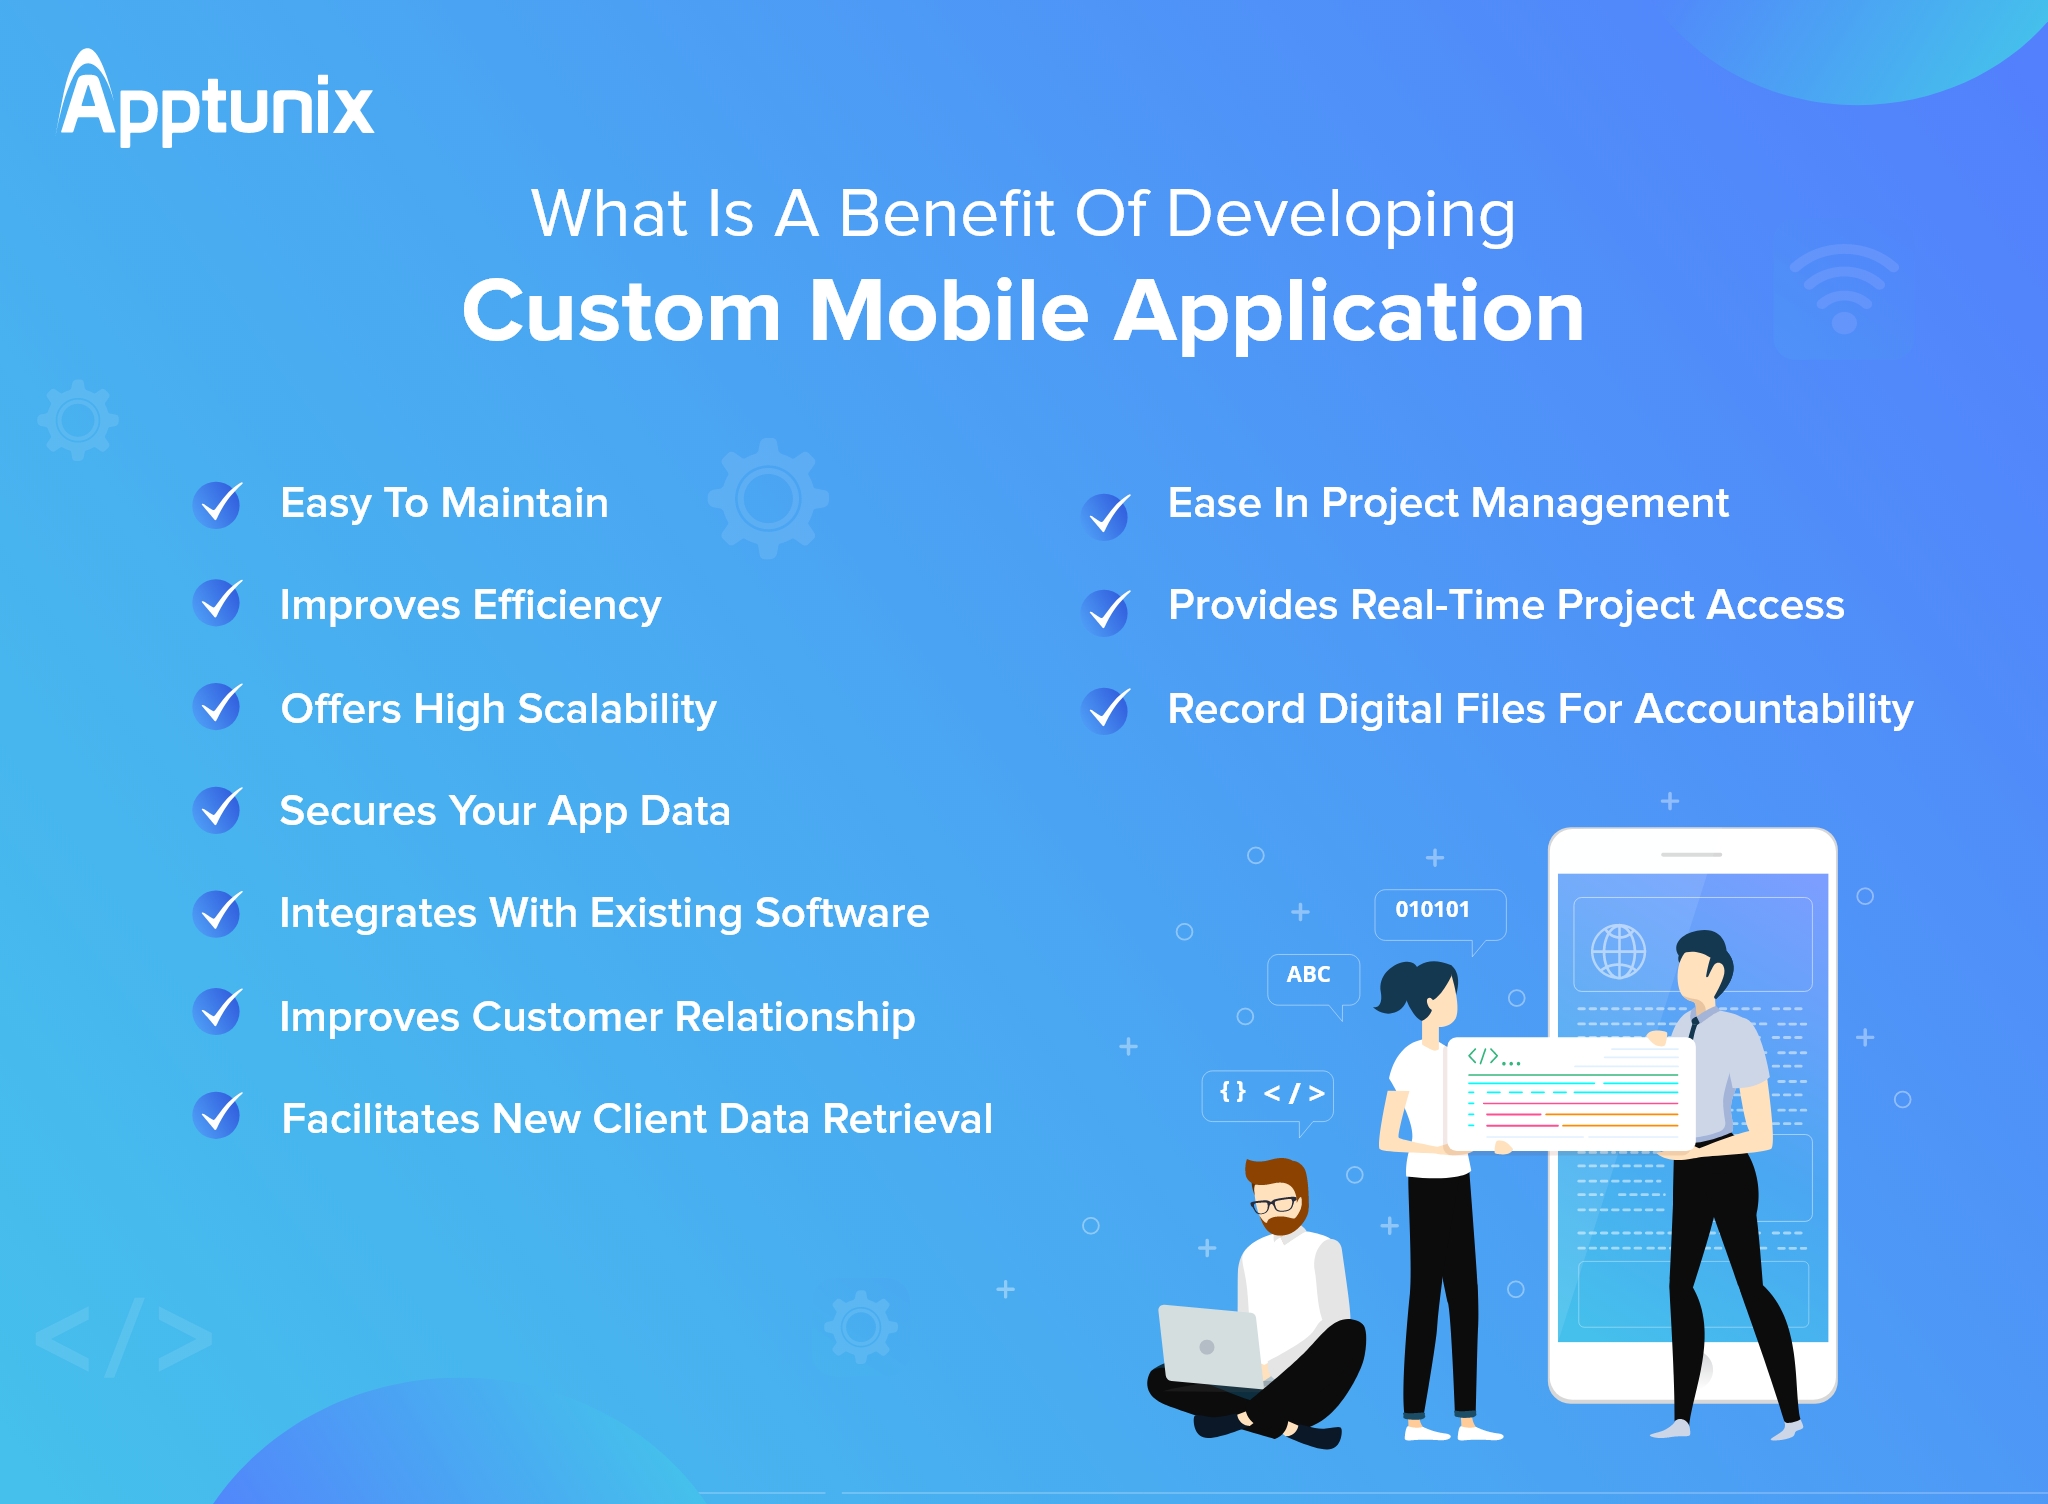 benefits of custom mobile app development